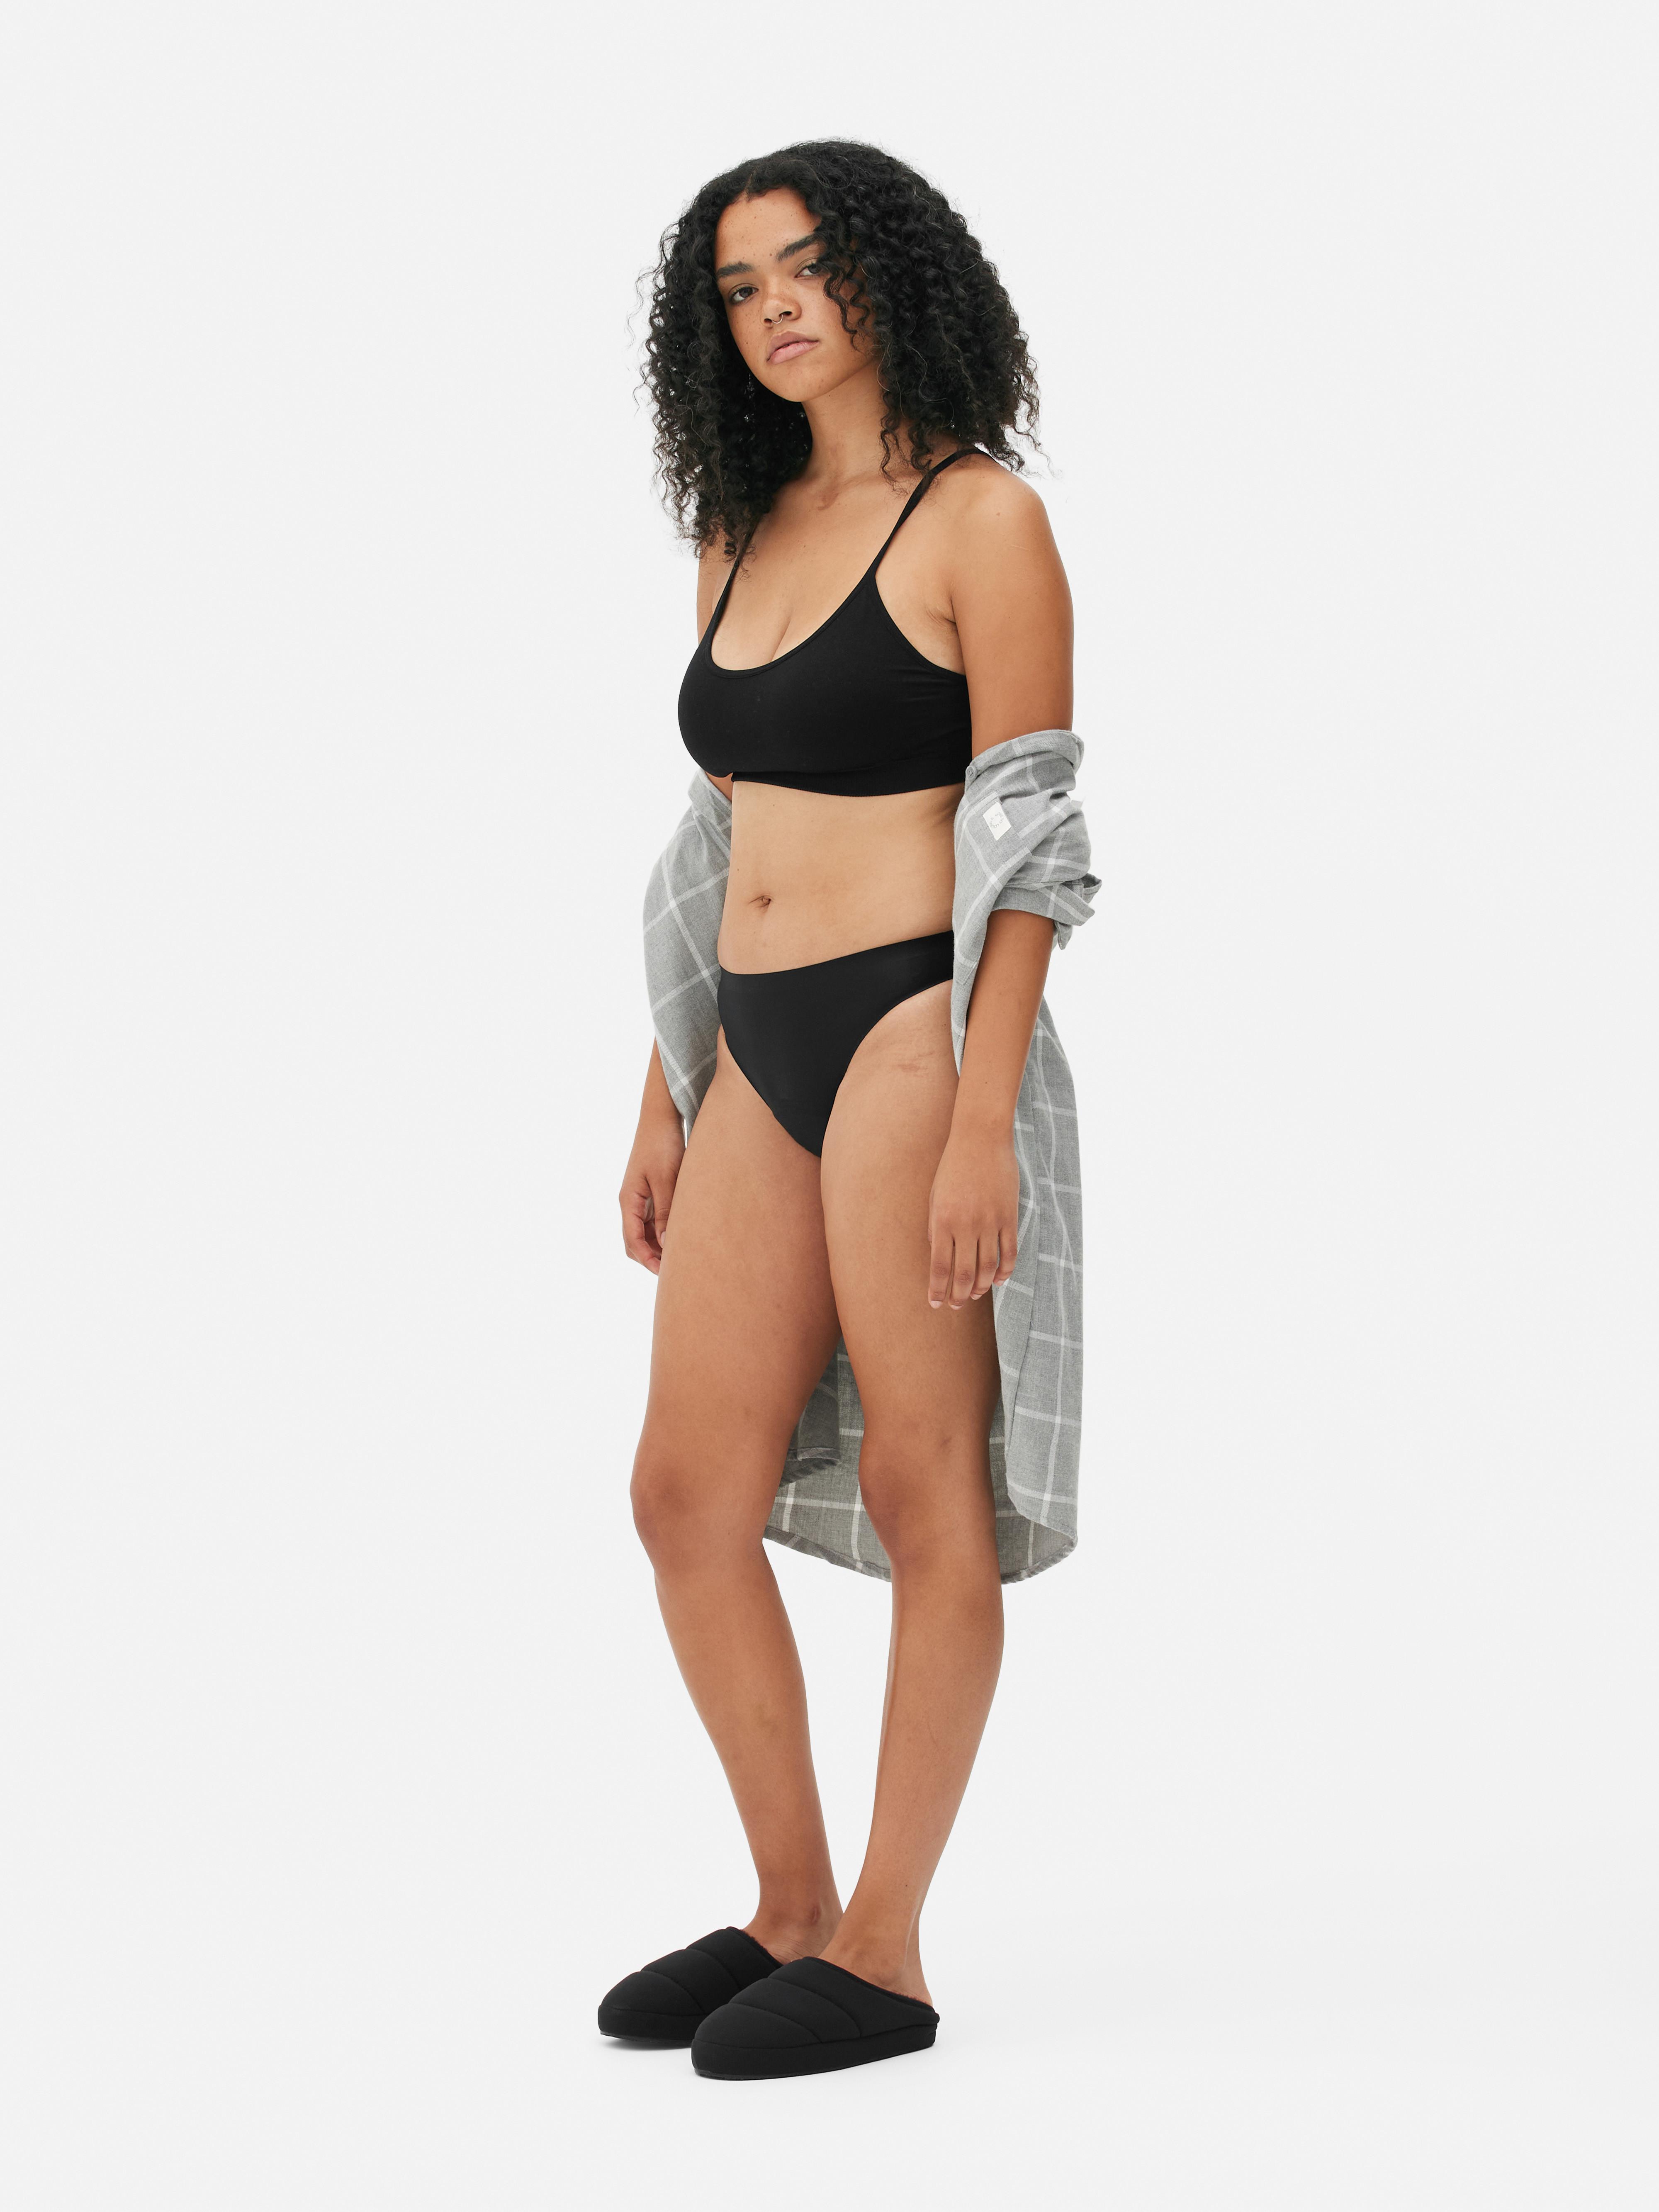 NEW THINX Between Girl's Size 11-12 Aqua Shorty & Gray Bikini